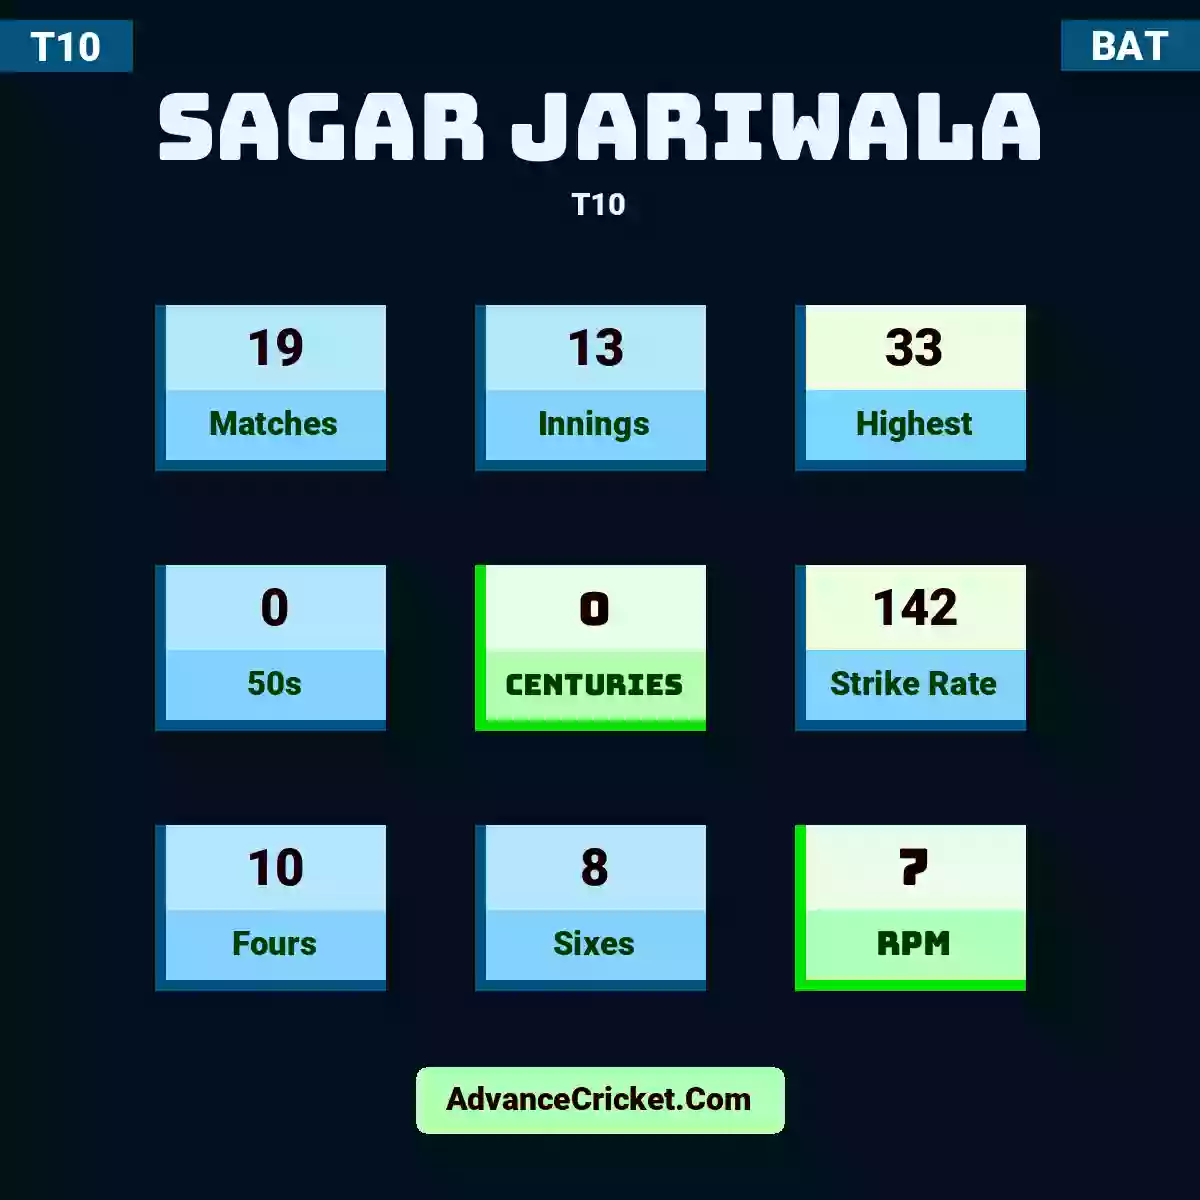 Sagar Jariwala T10 , Sagar Jariwala played 19 matches, scored 33 runs as highest, 0 half-centuries, and 0 centuries, with a strike rate of 142. S.Jariwala hit 10 fours and 8 sixes, with an RPM of 7.